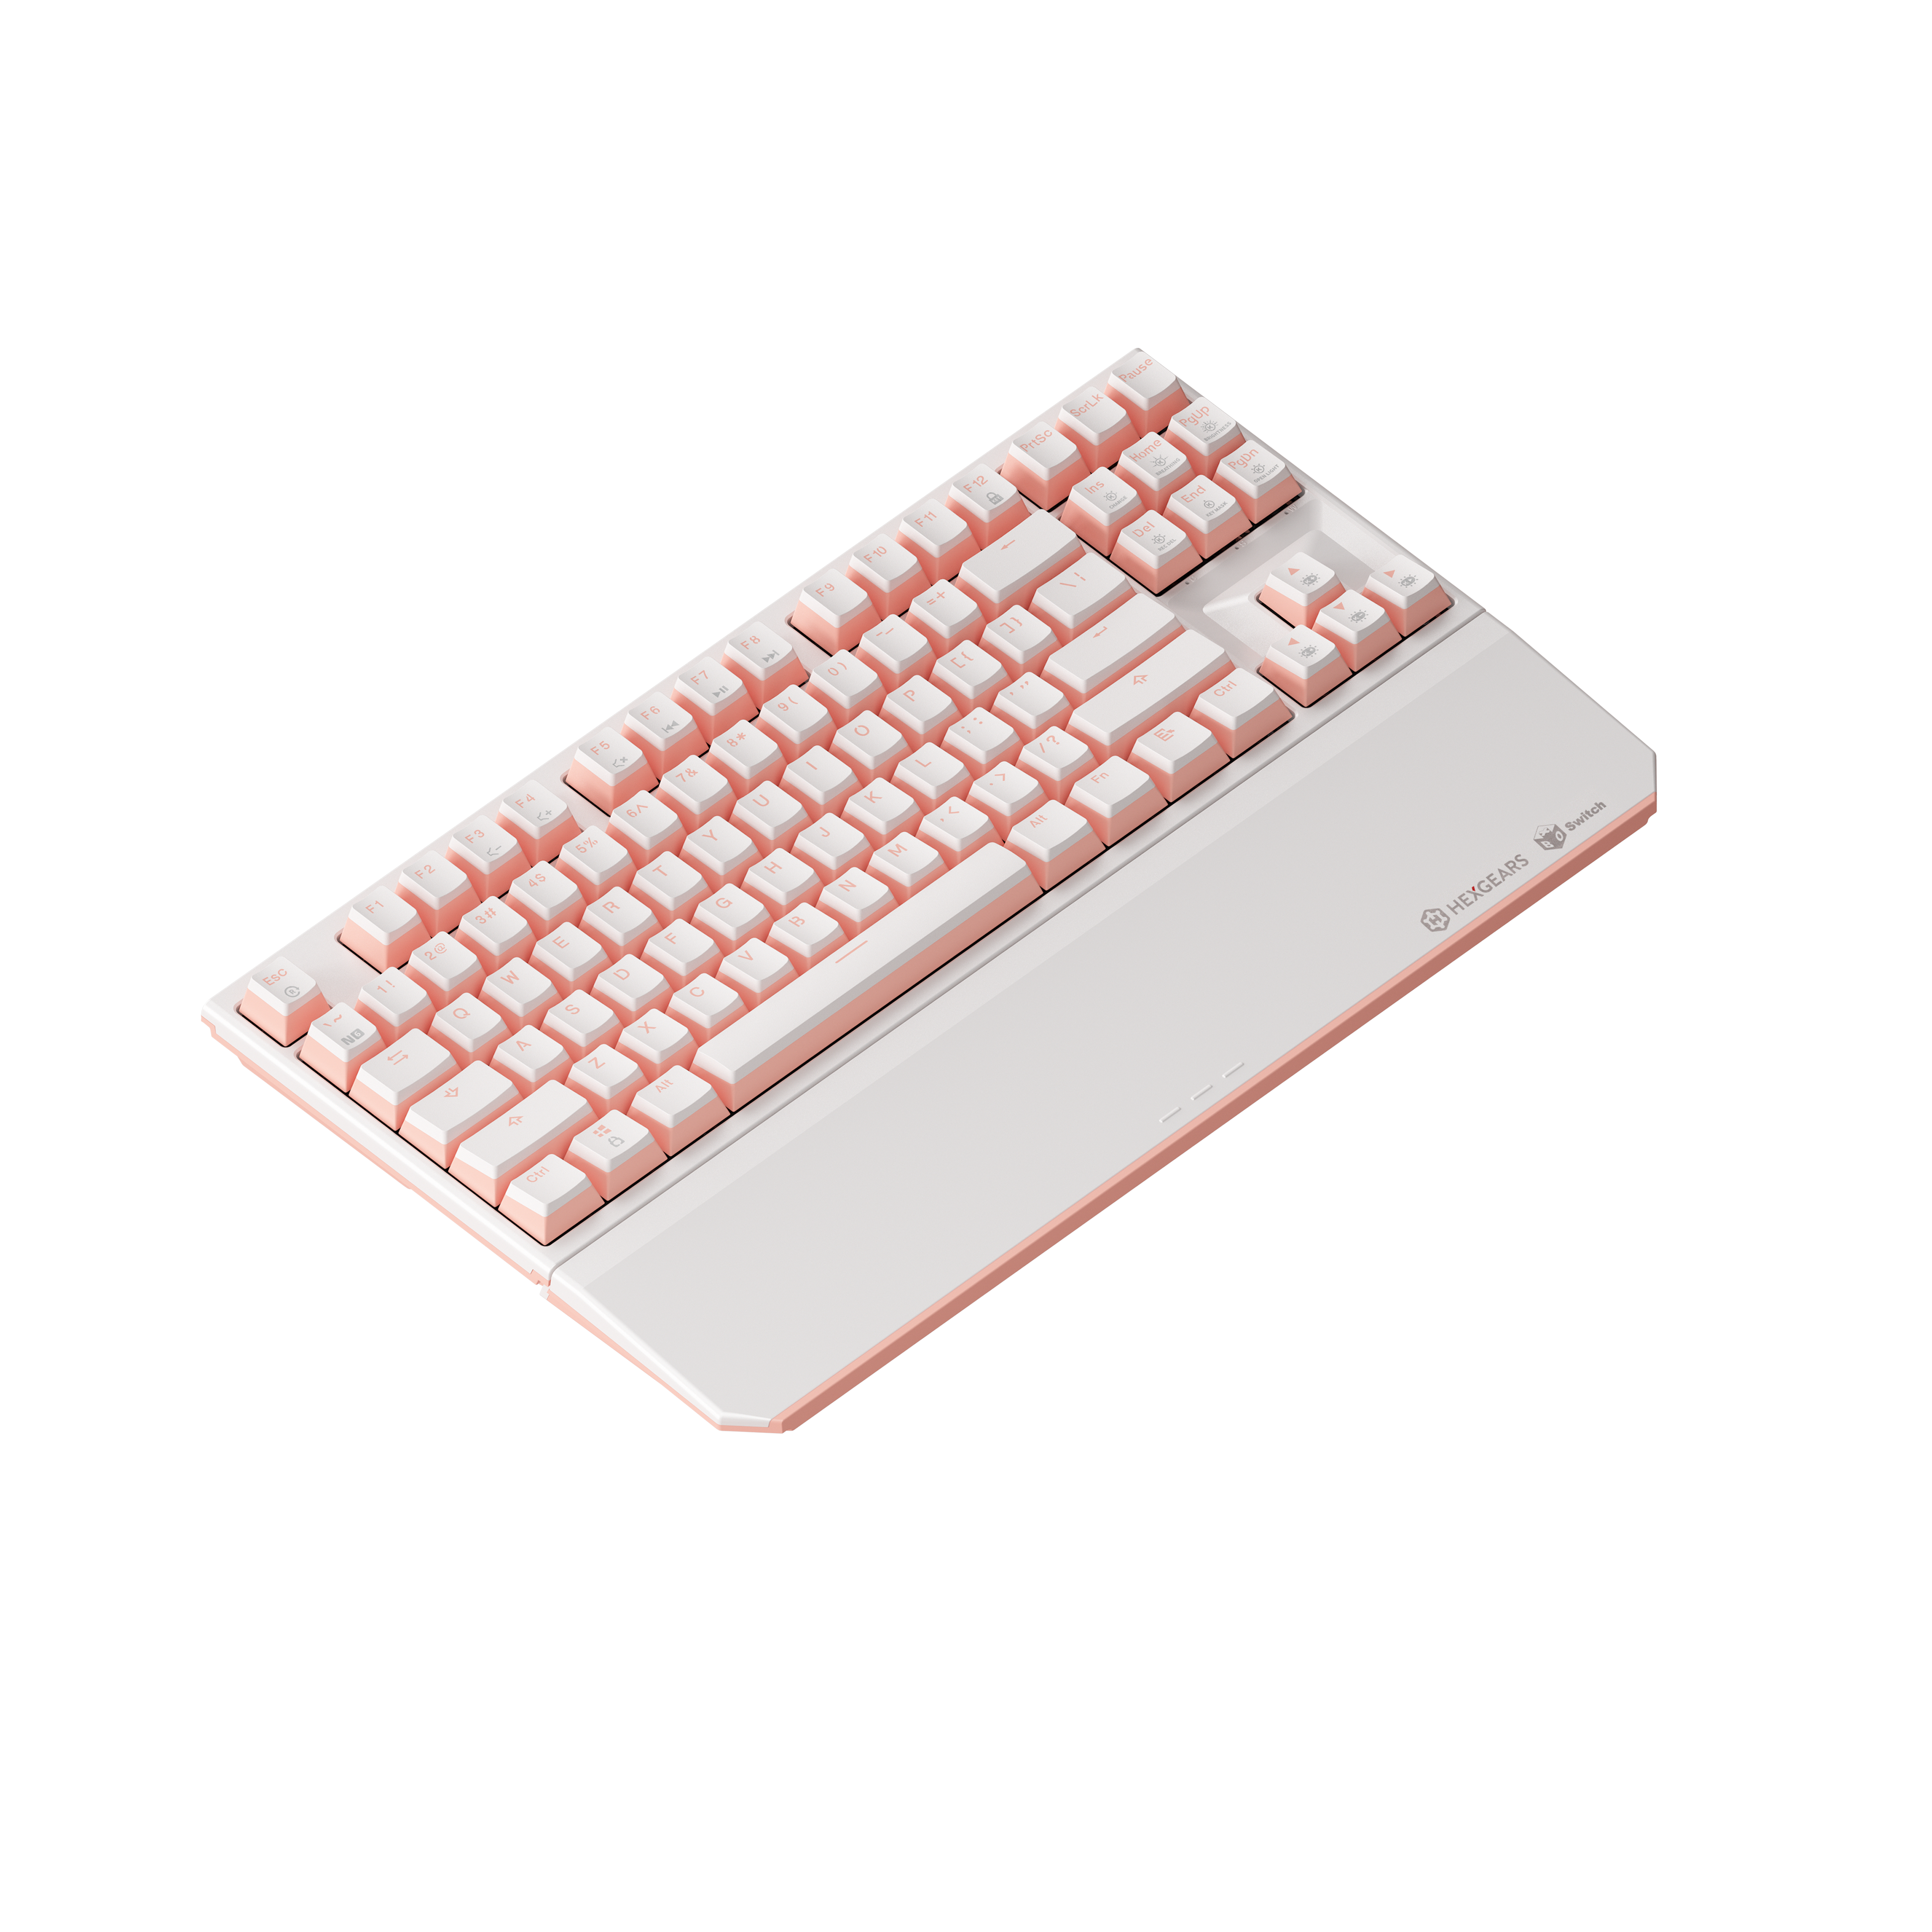 X3 Wireless Mechanical Keyboard